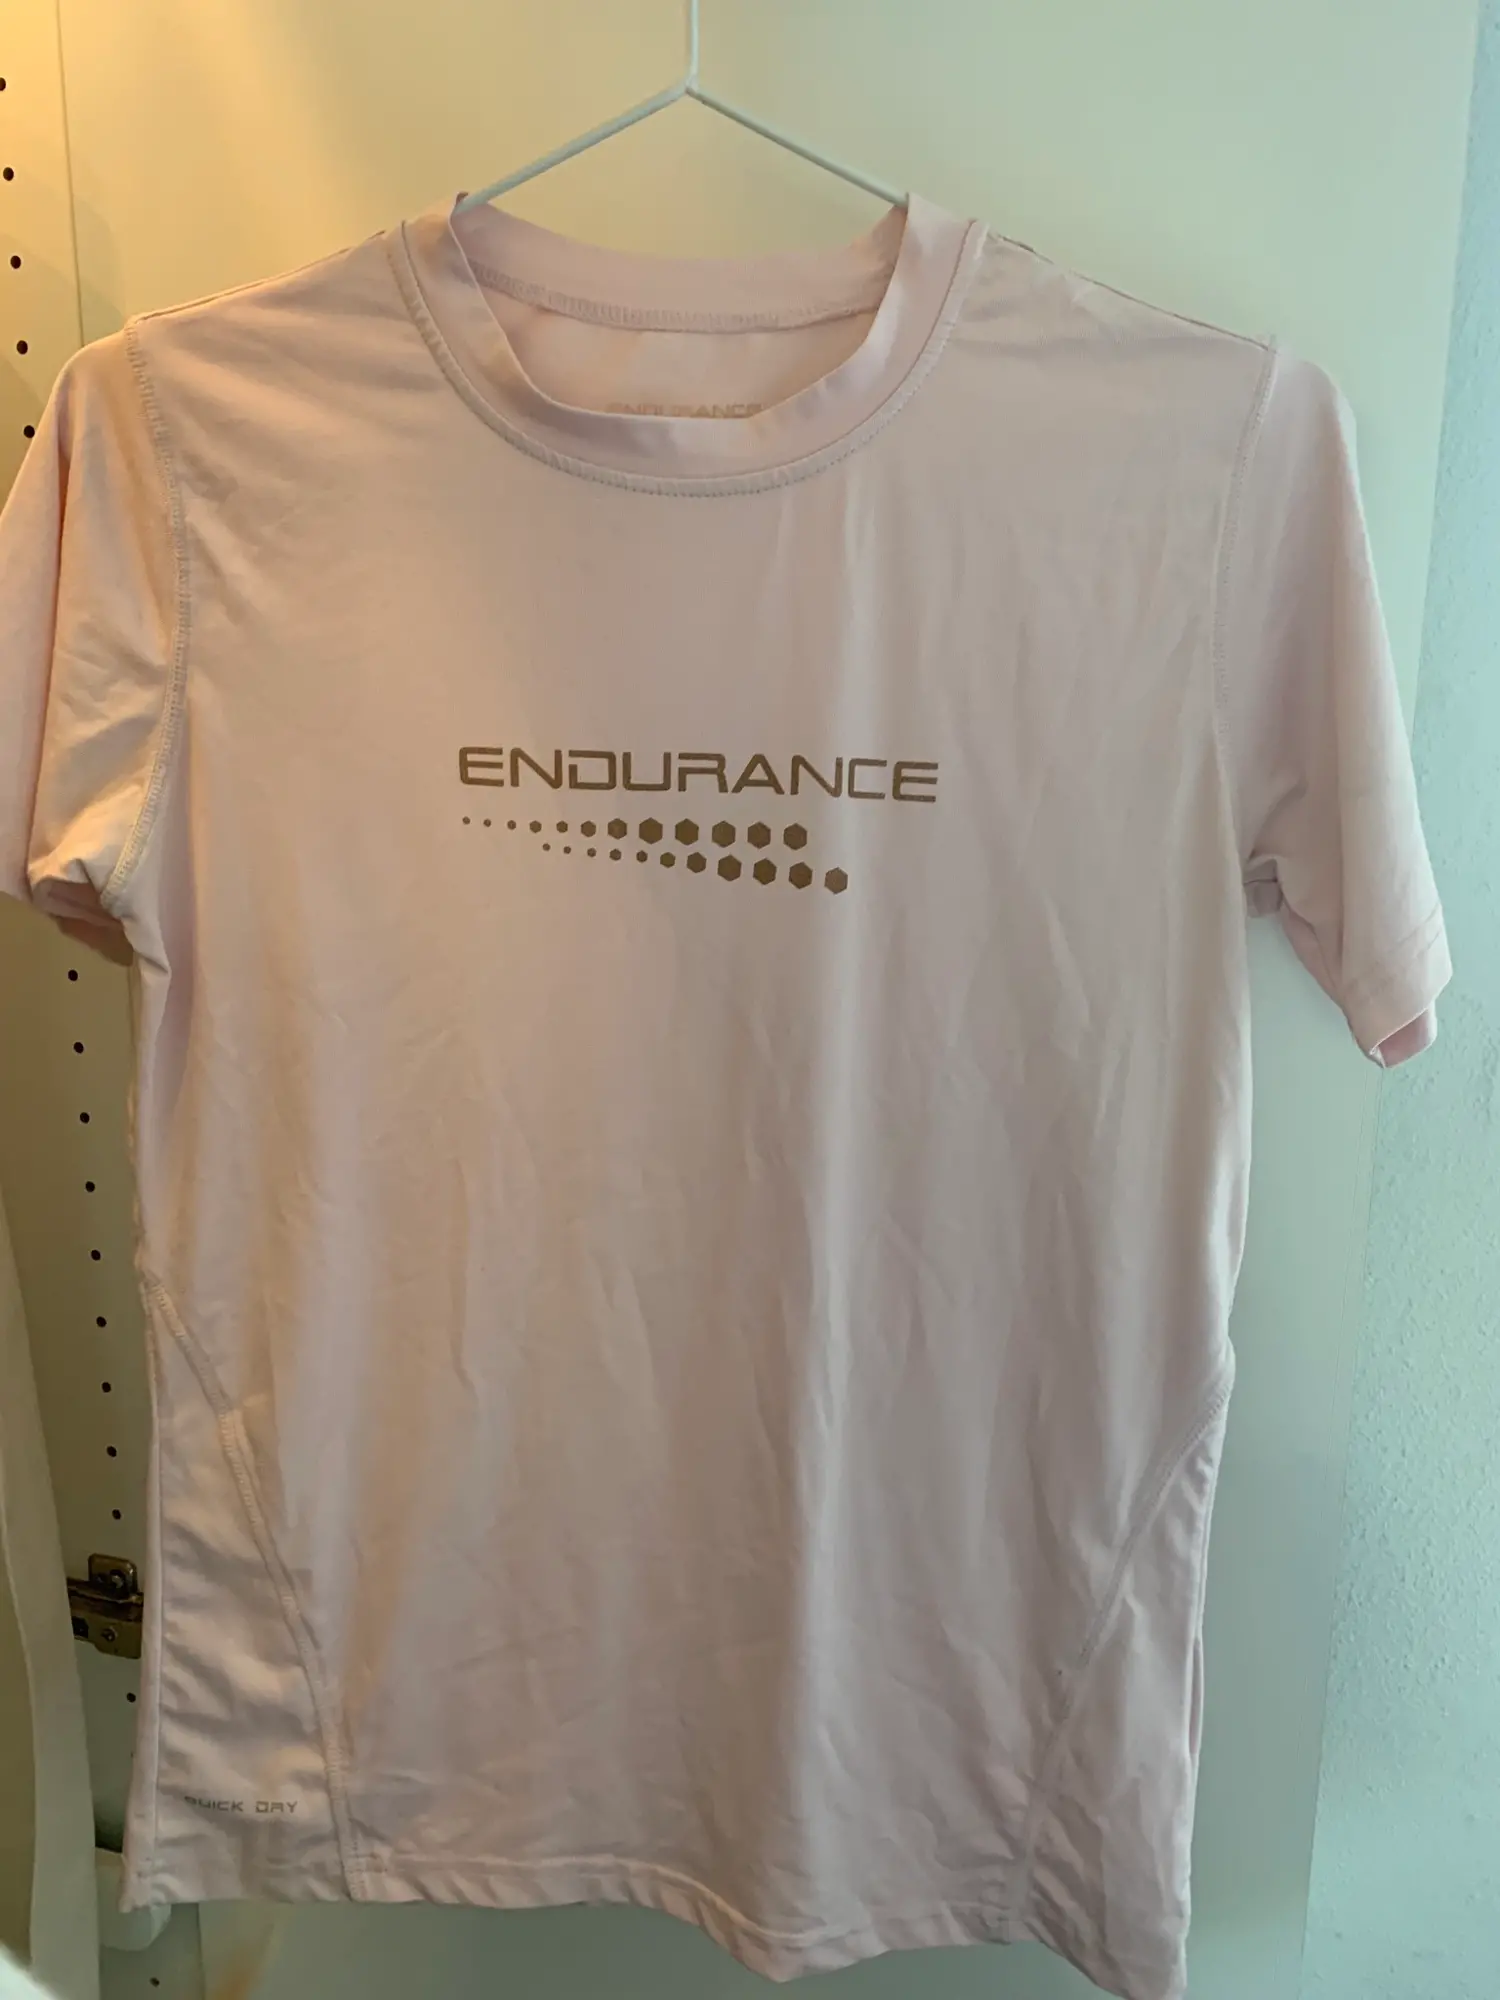 Endurance t-shirt